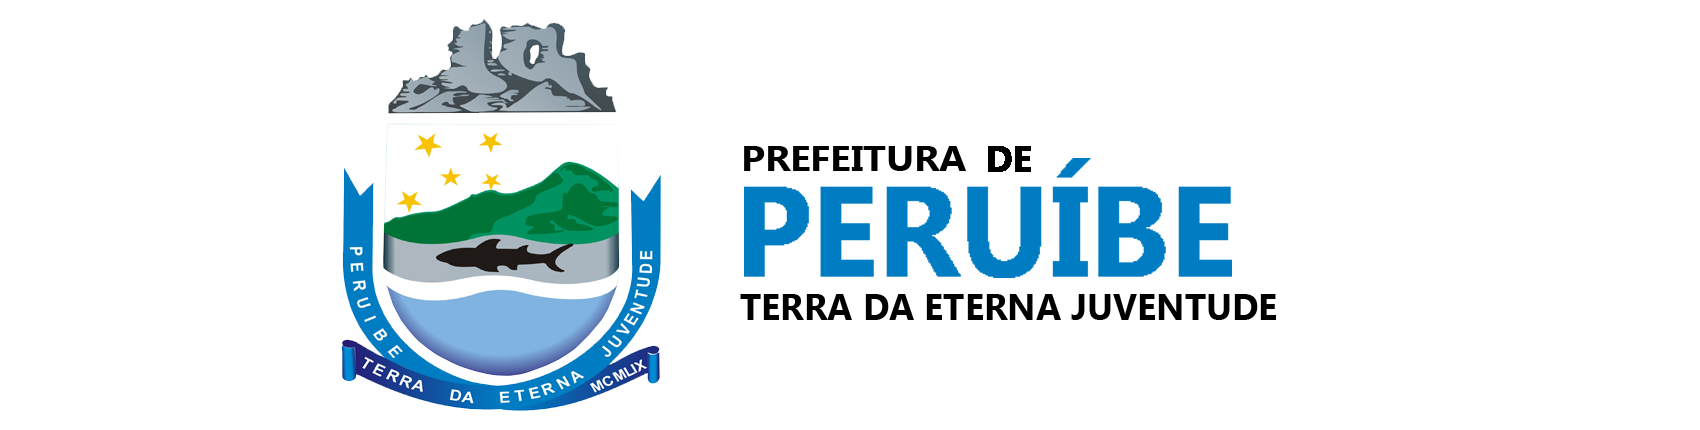 25/07/2007 - 0288 - 5.143 KB - Prefeitura de Peruíbe